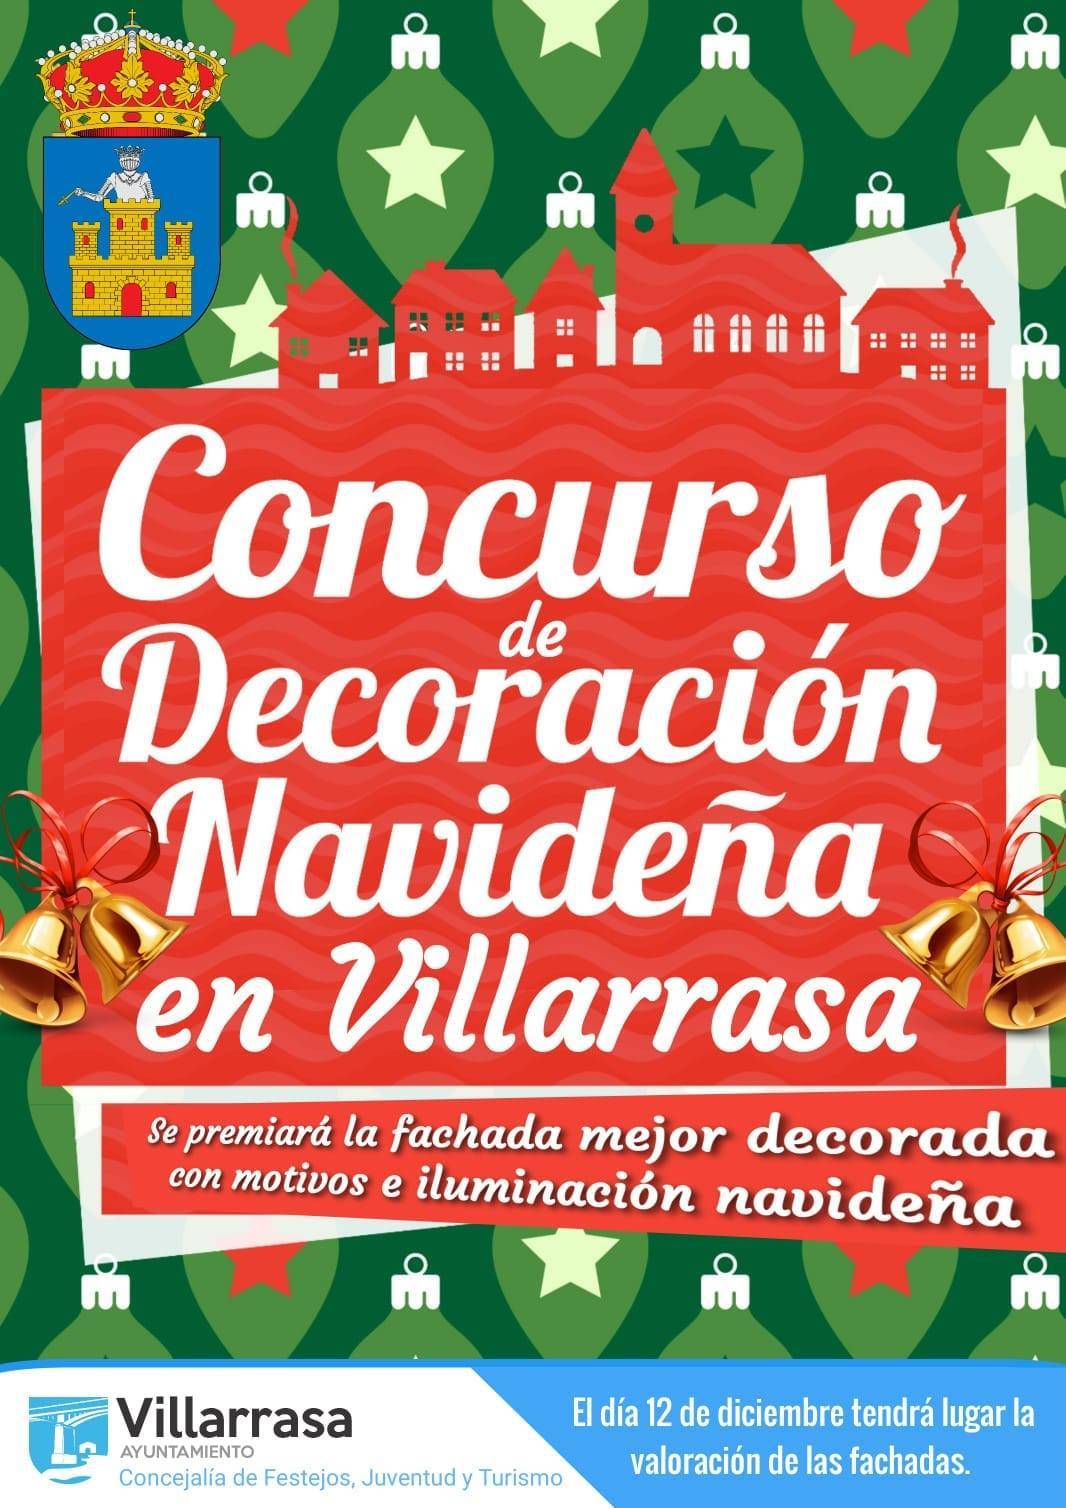 Concurso de decoración navideña (2020) - Villarrasa (Huelva)